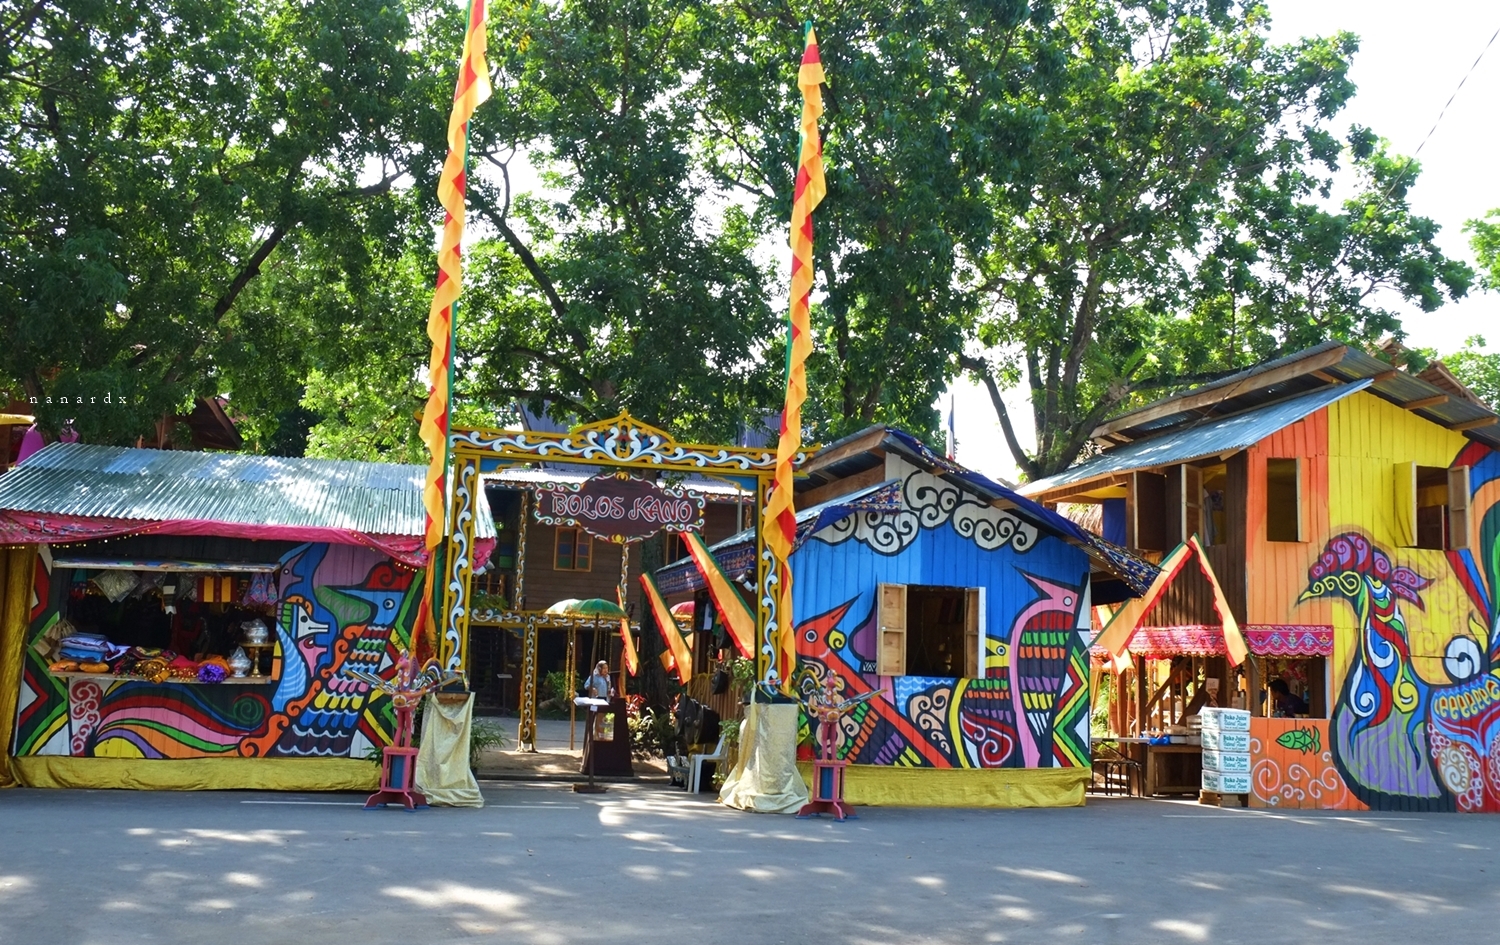 ARMM Cultural Villages celebrates rich culture, history of Muslim Mindanao